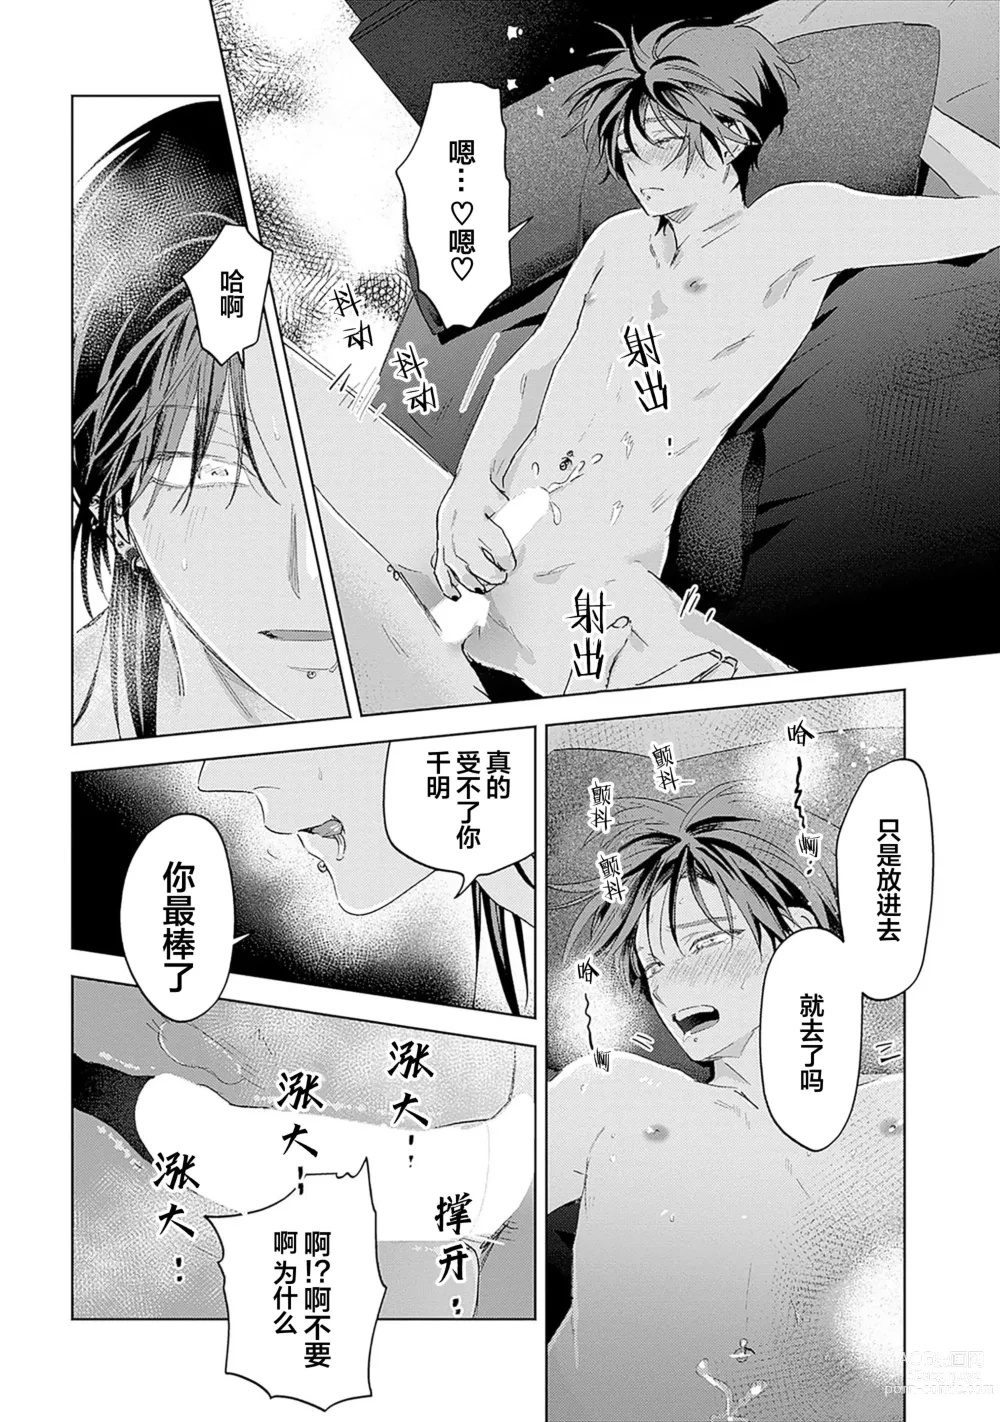 Page 260 of manga 朋克三角